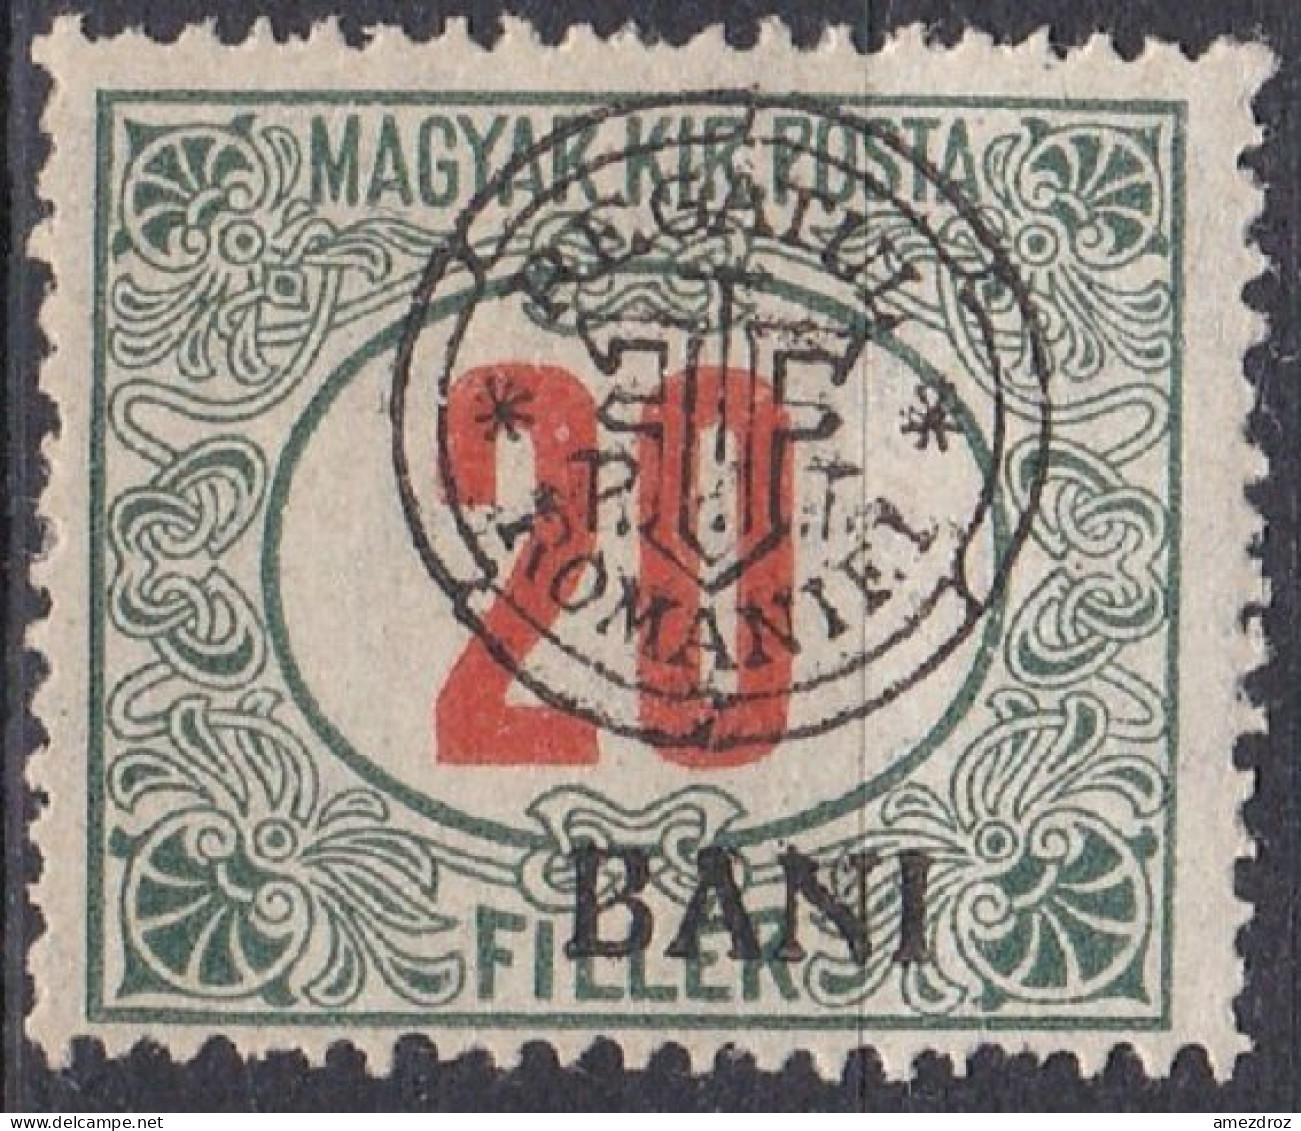 Transylvanie Cluj Kolozsvar 1919 Taxe N° 6 *  (J20) - Transilvania